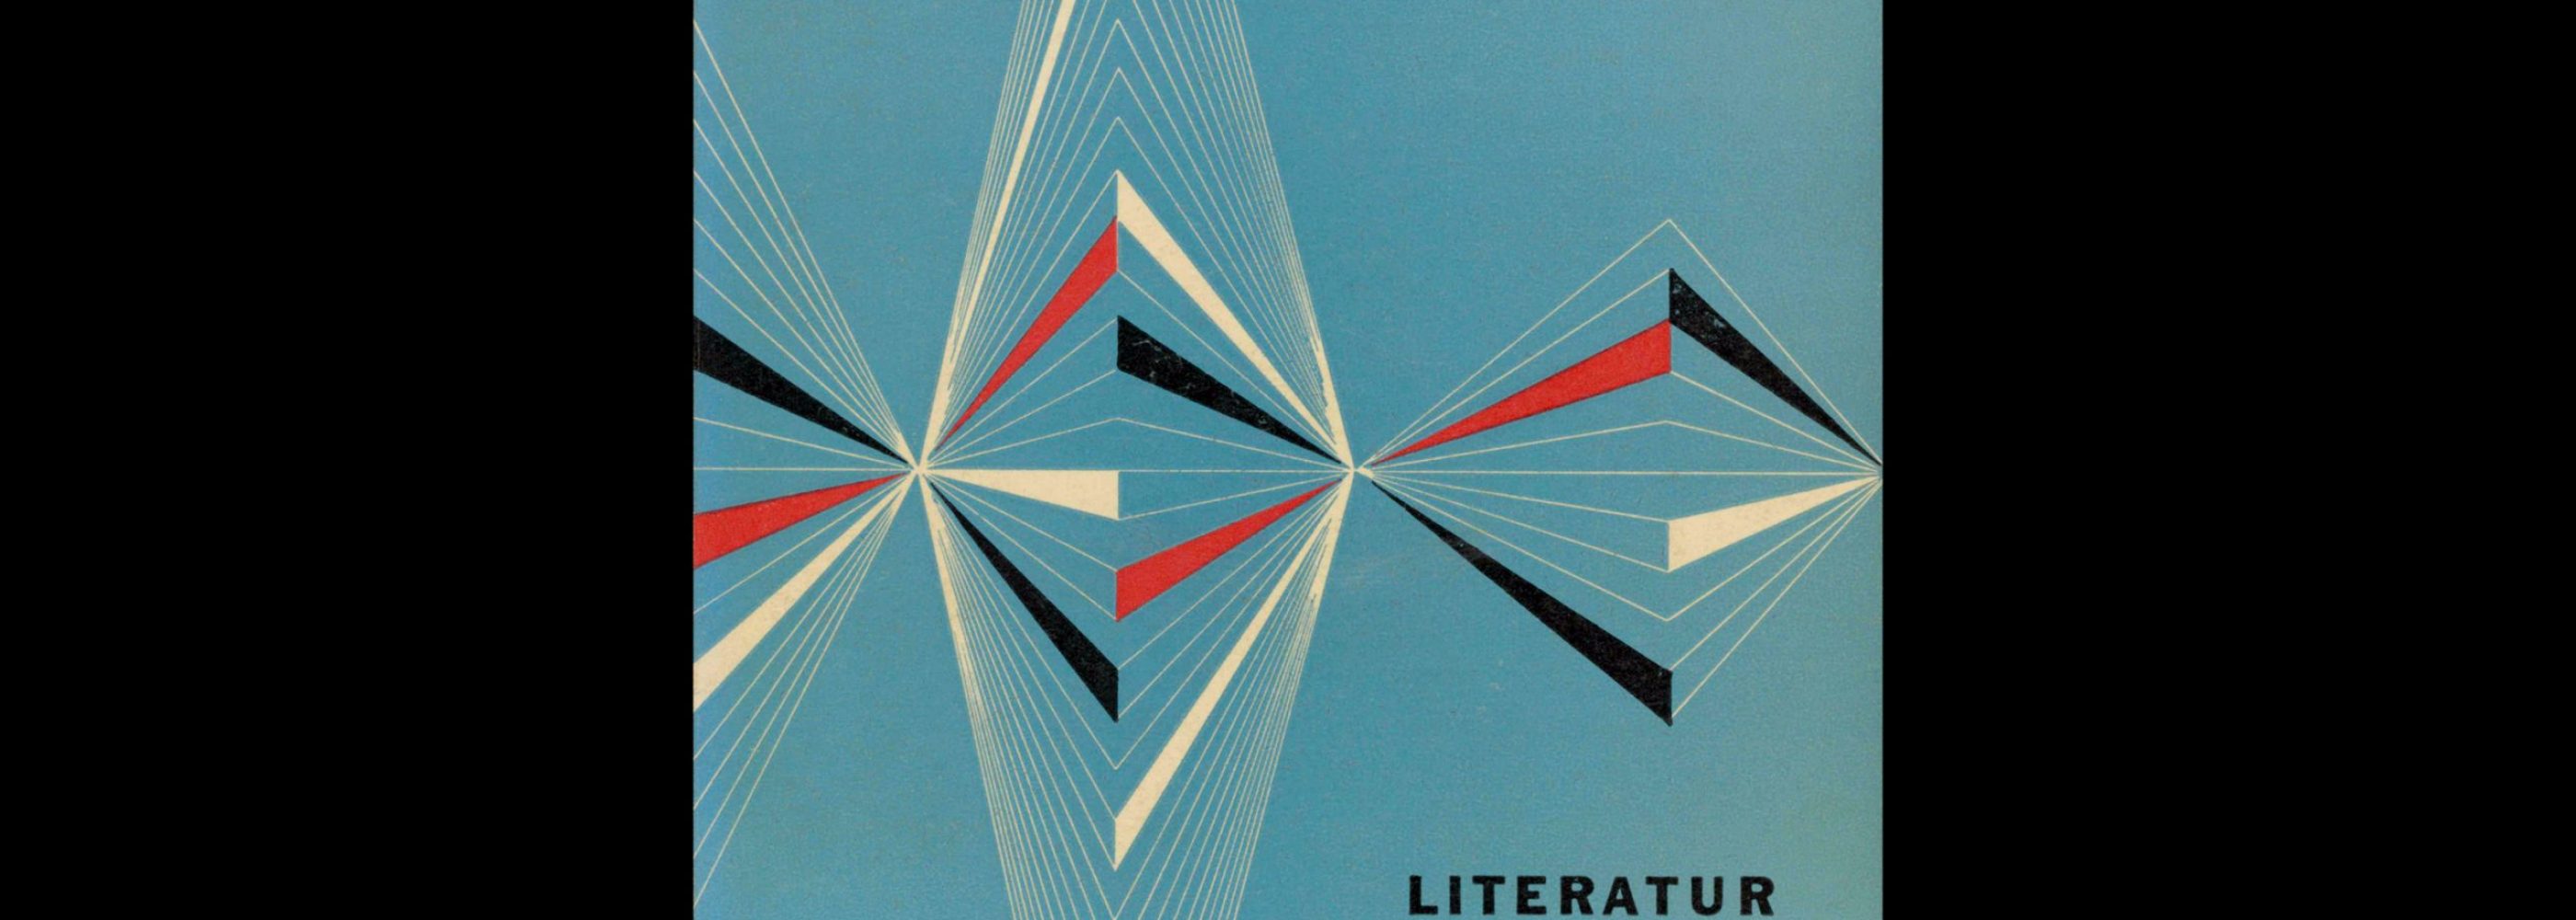 Perspektiven, Literatur, Kunst, Musik, 1, 1952. Cover design by Alvin Lustig